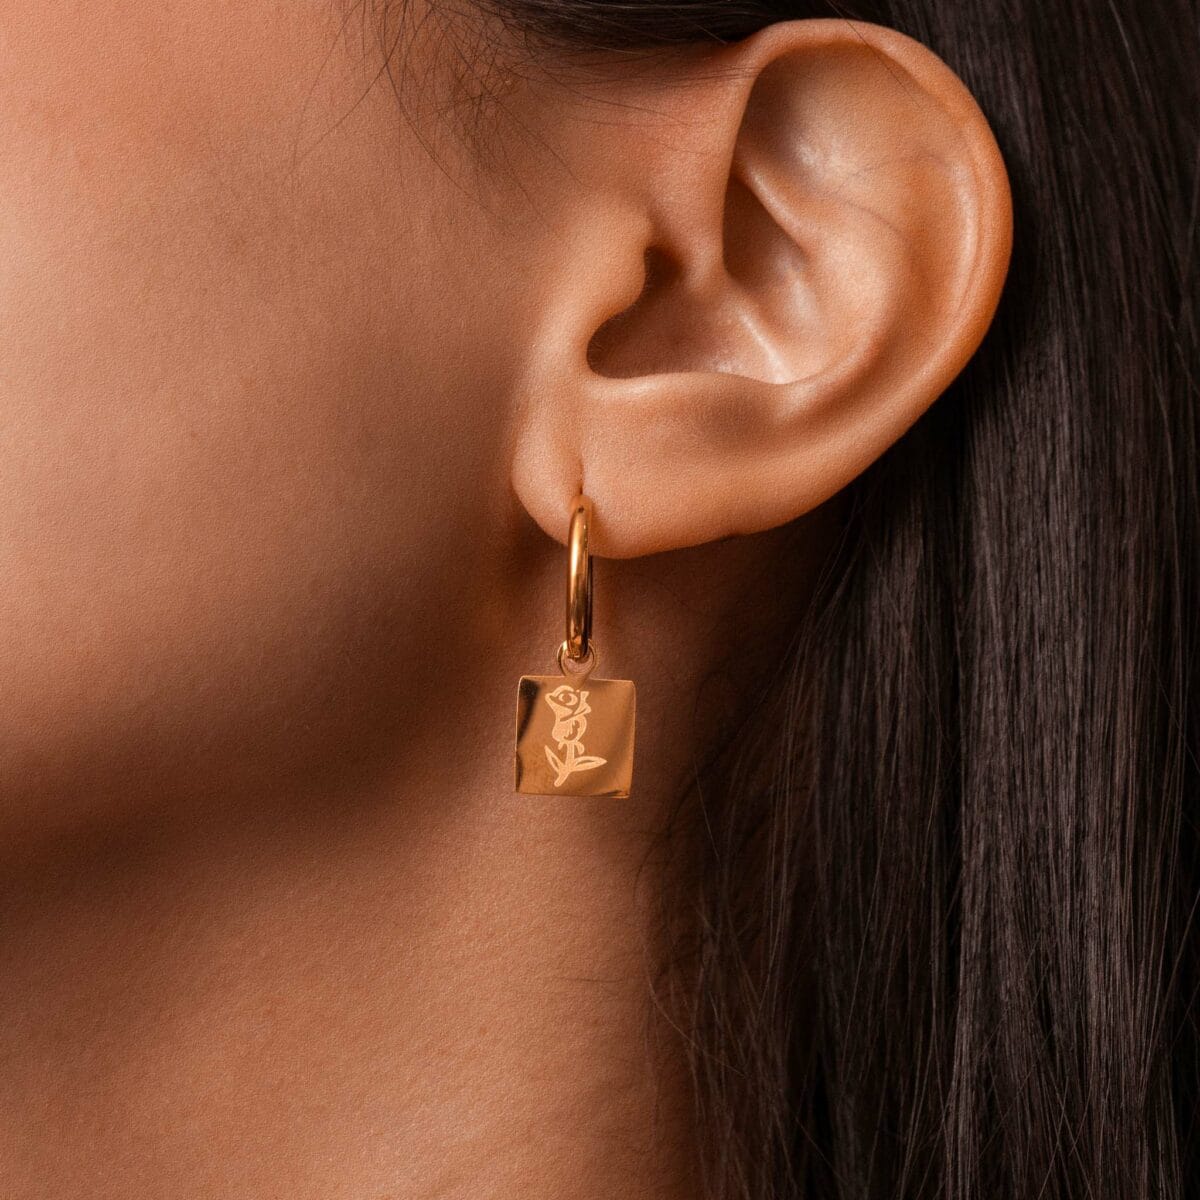 https://m.clubbella.co/product/rosie-earrings/ ROsie earrings (6)